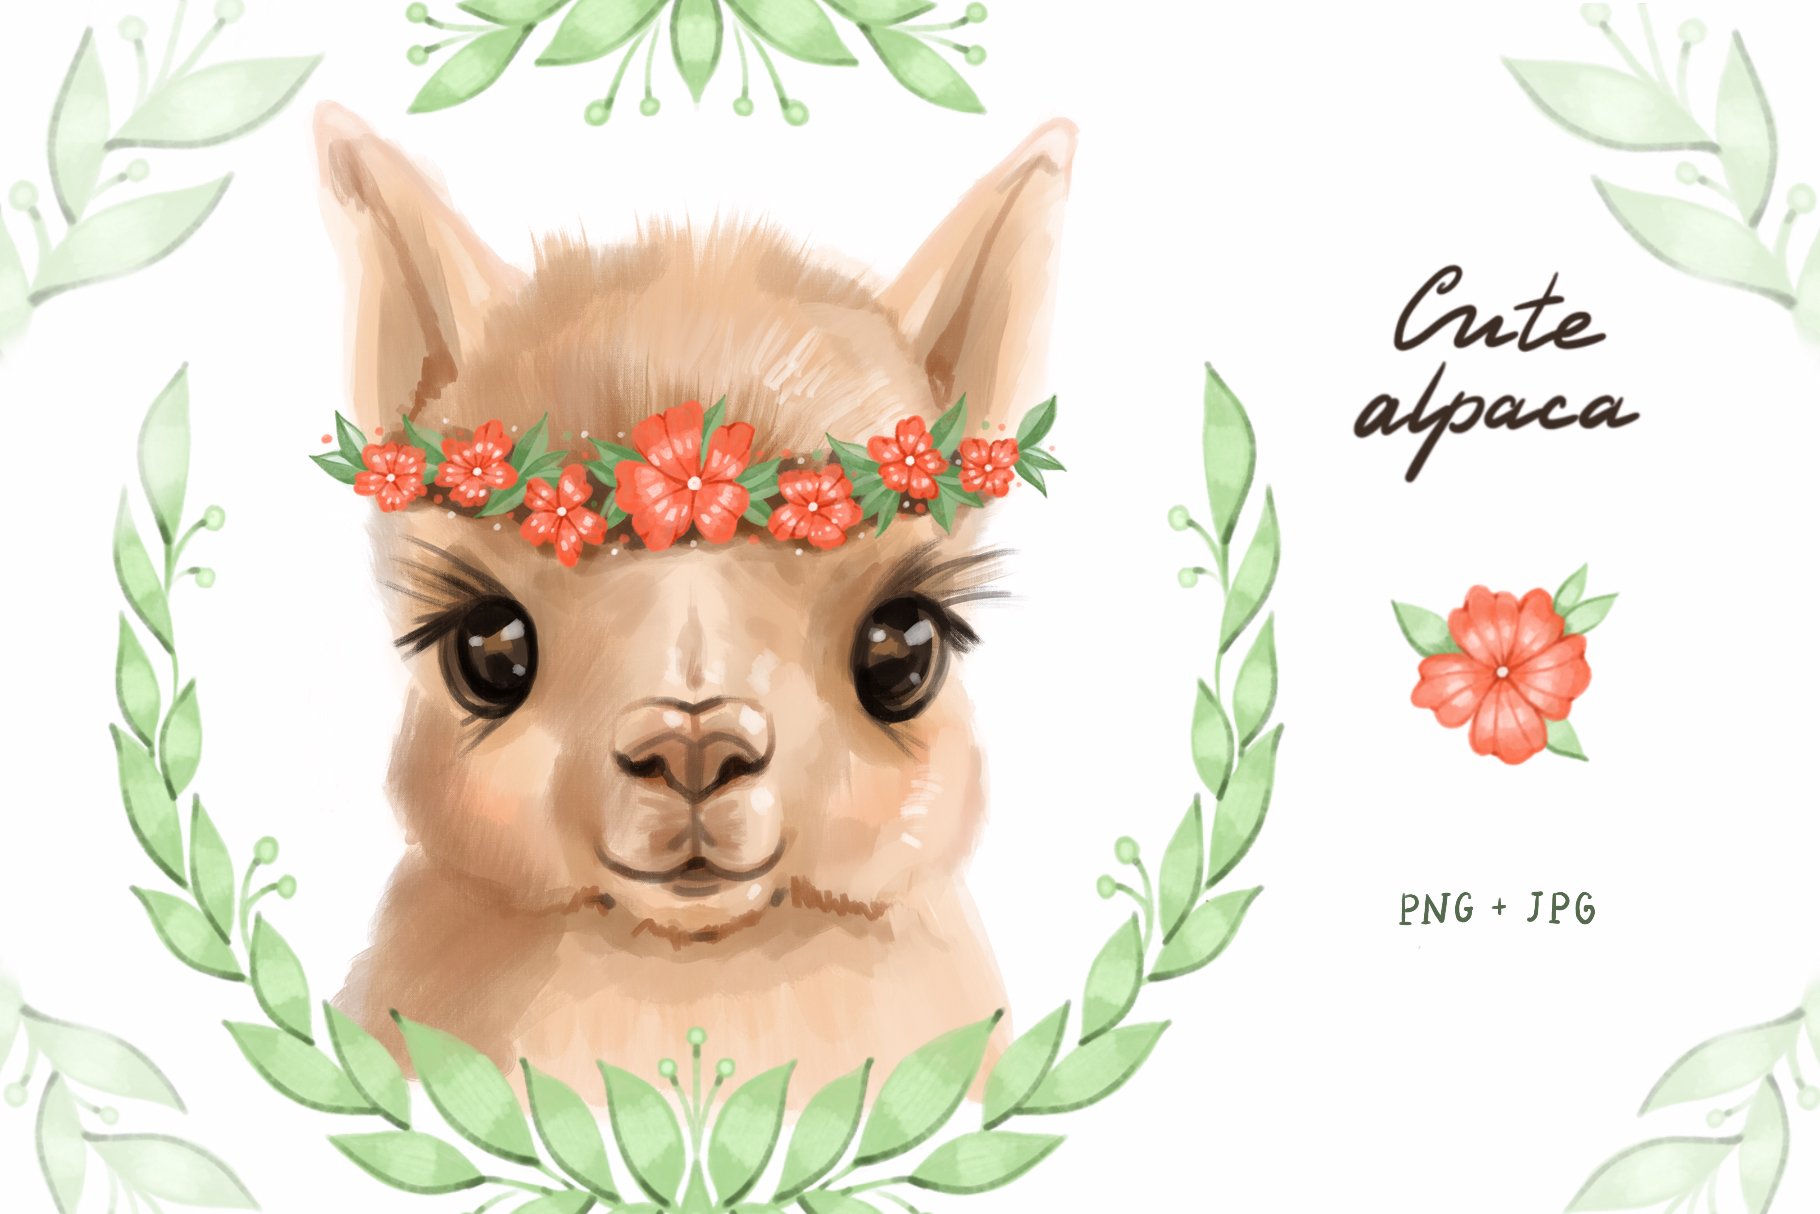 Cute alpaca digital cliparts cover image.